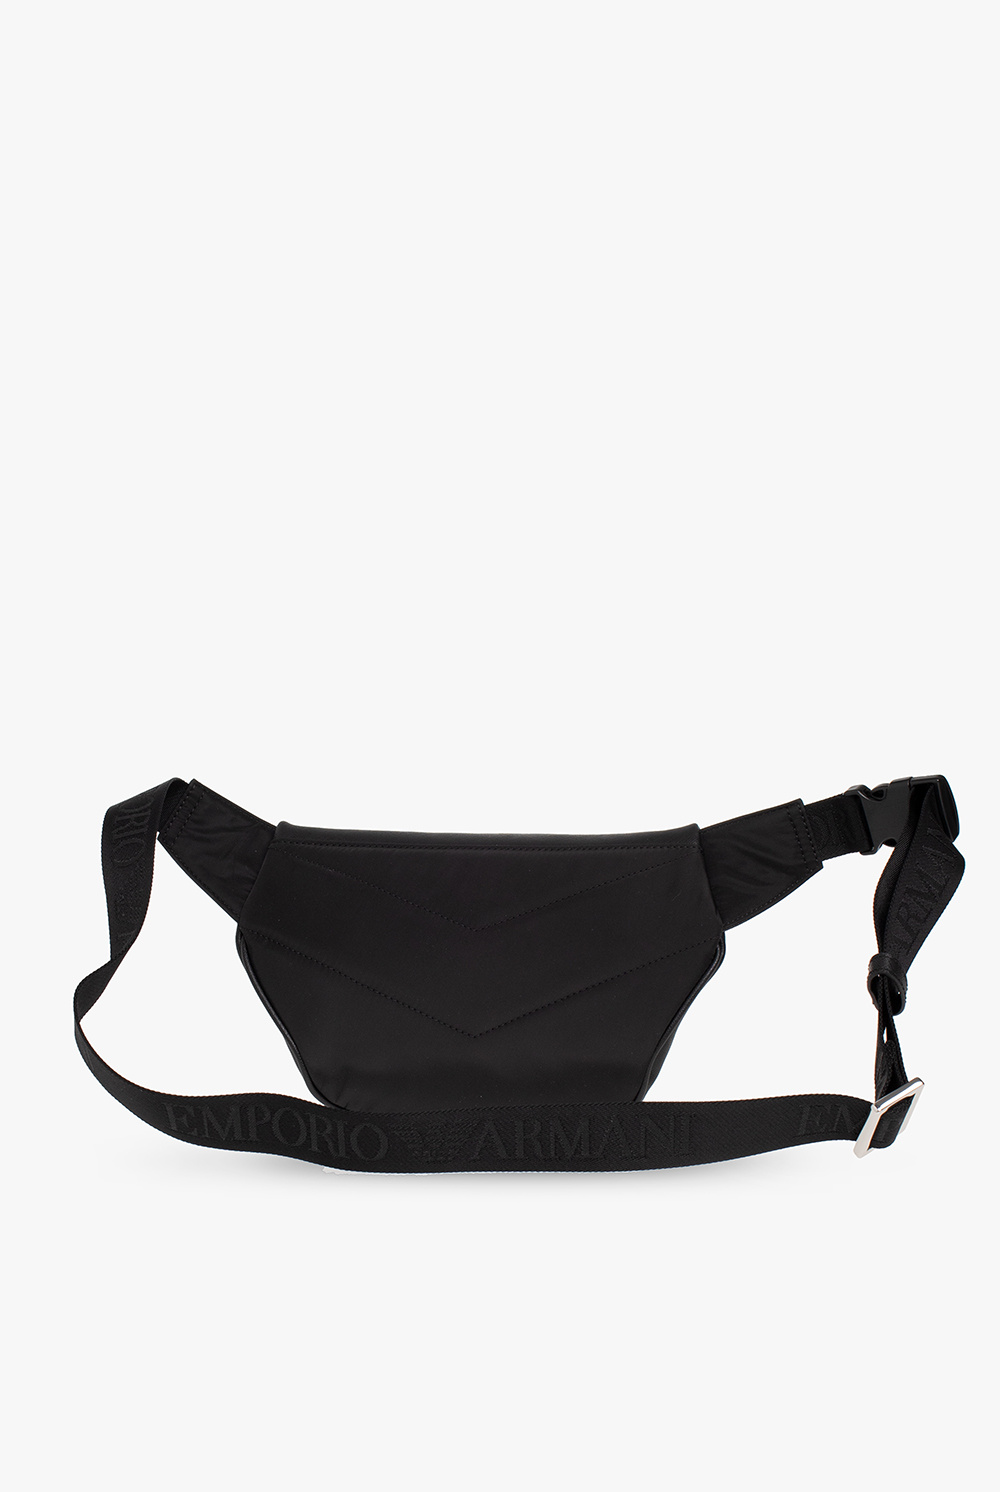 Emporio armani short-sleeved Belt bag with logo